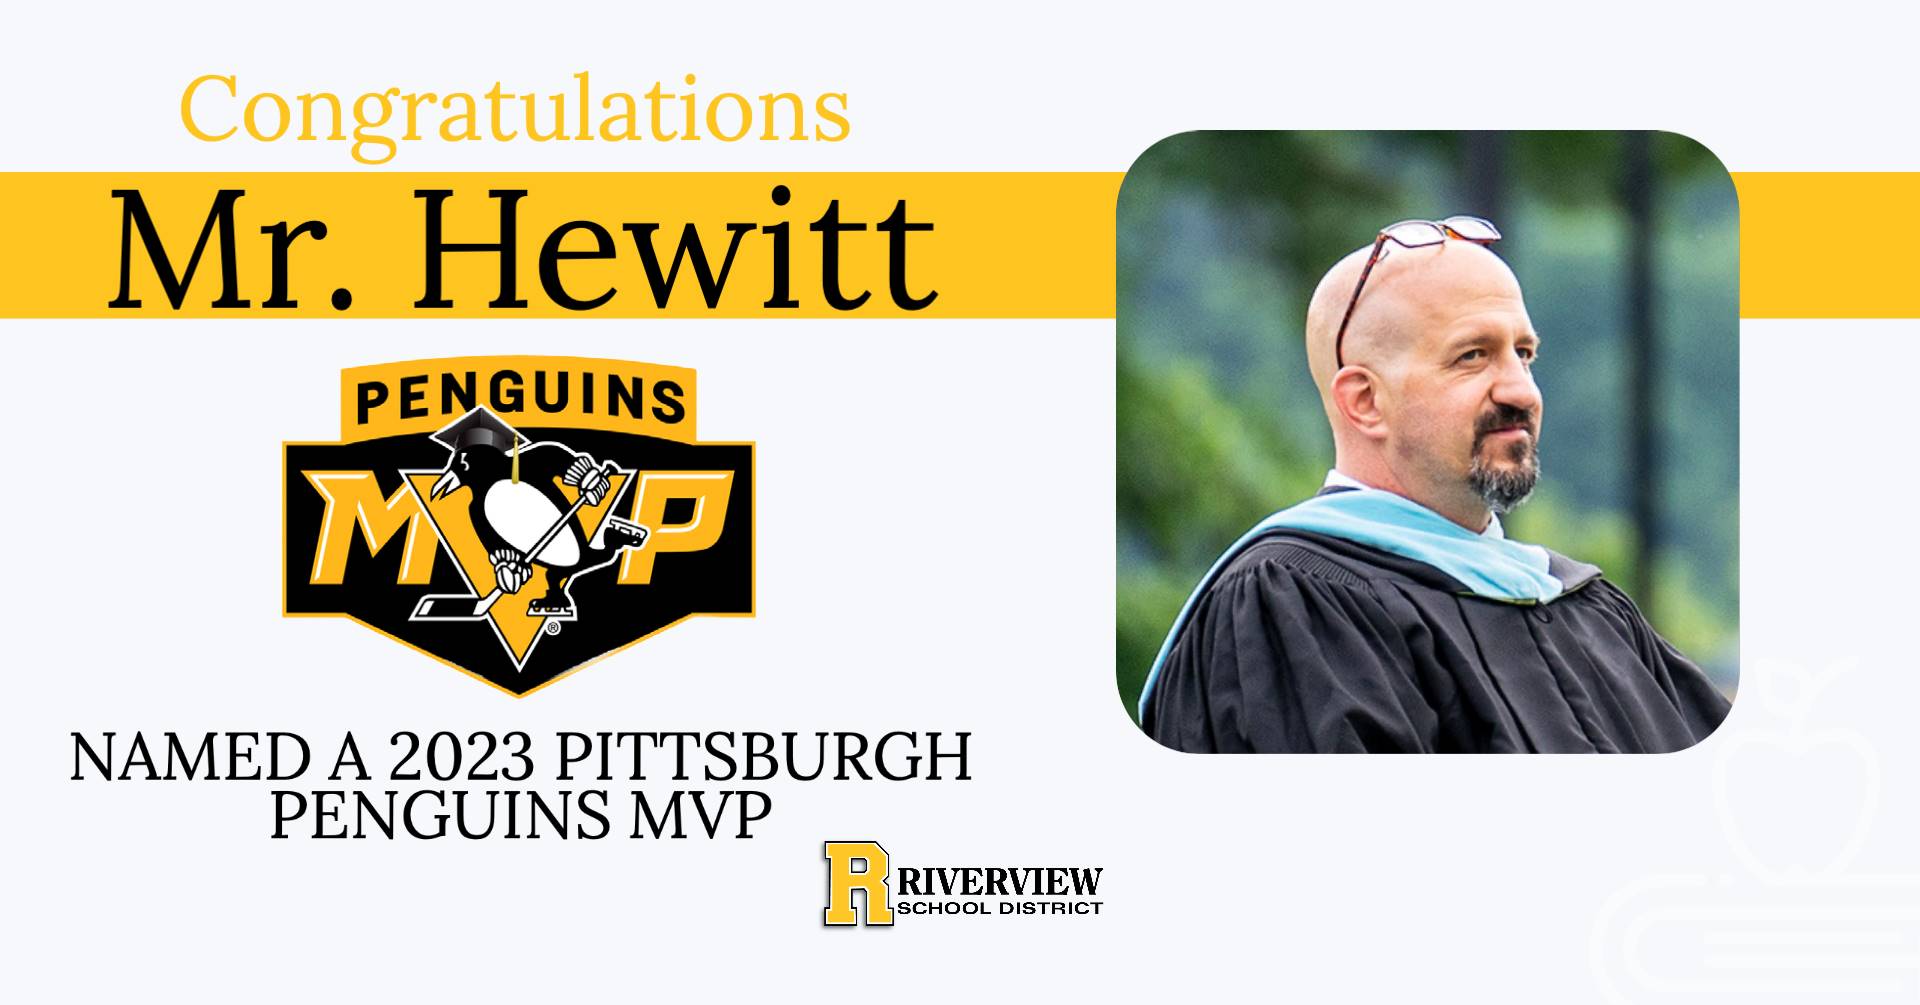 Mr. Hewitt named a 2023 Pittsburgh Penguins MVP (Most Valuable Principal)